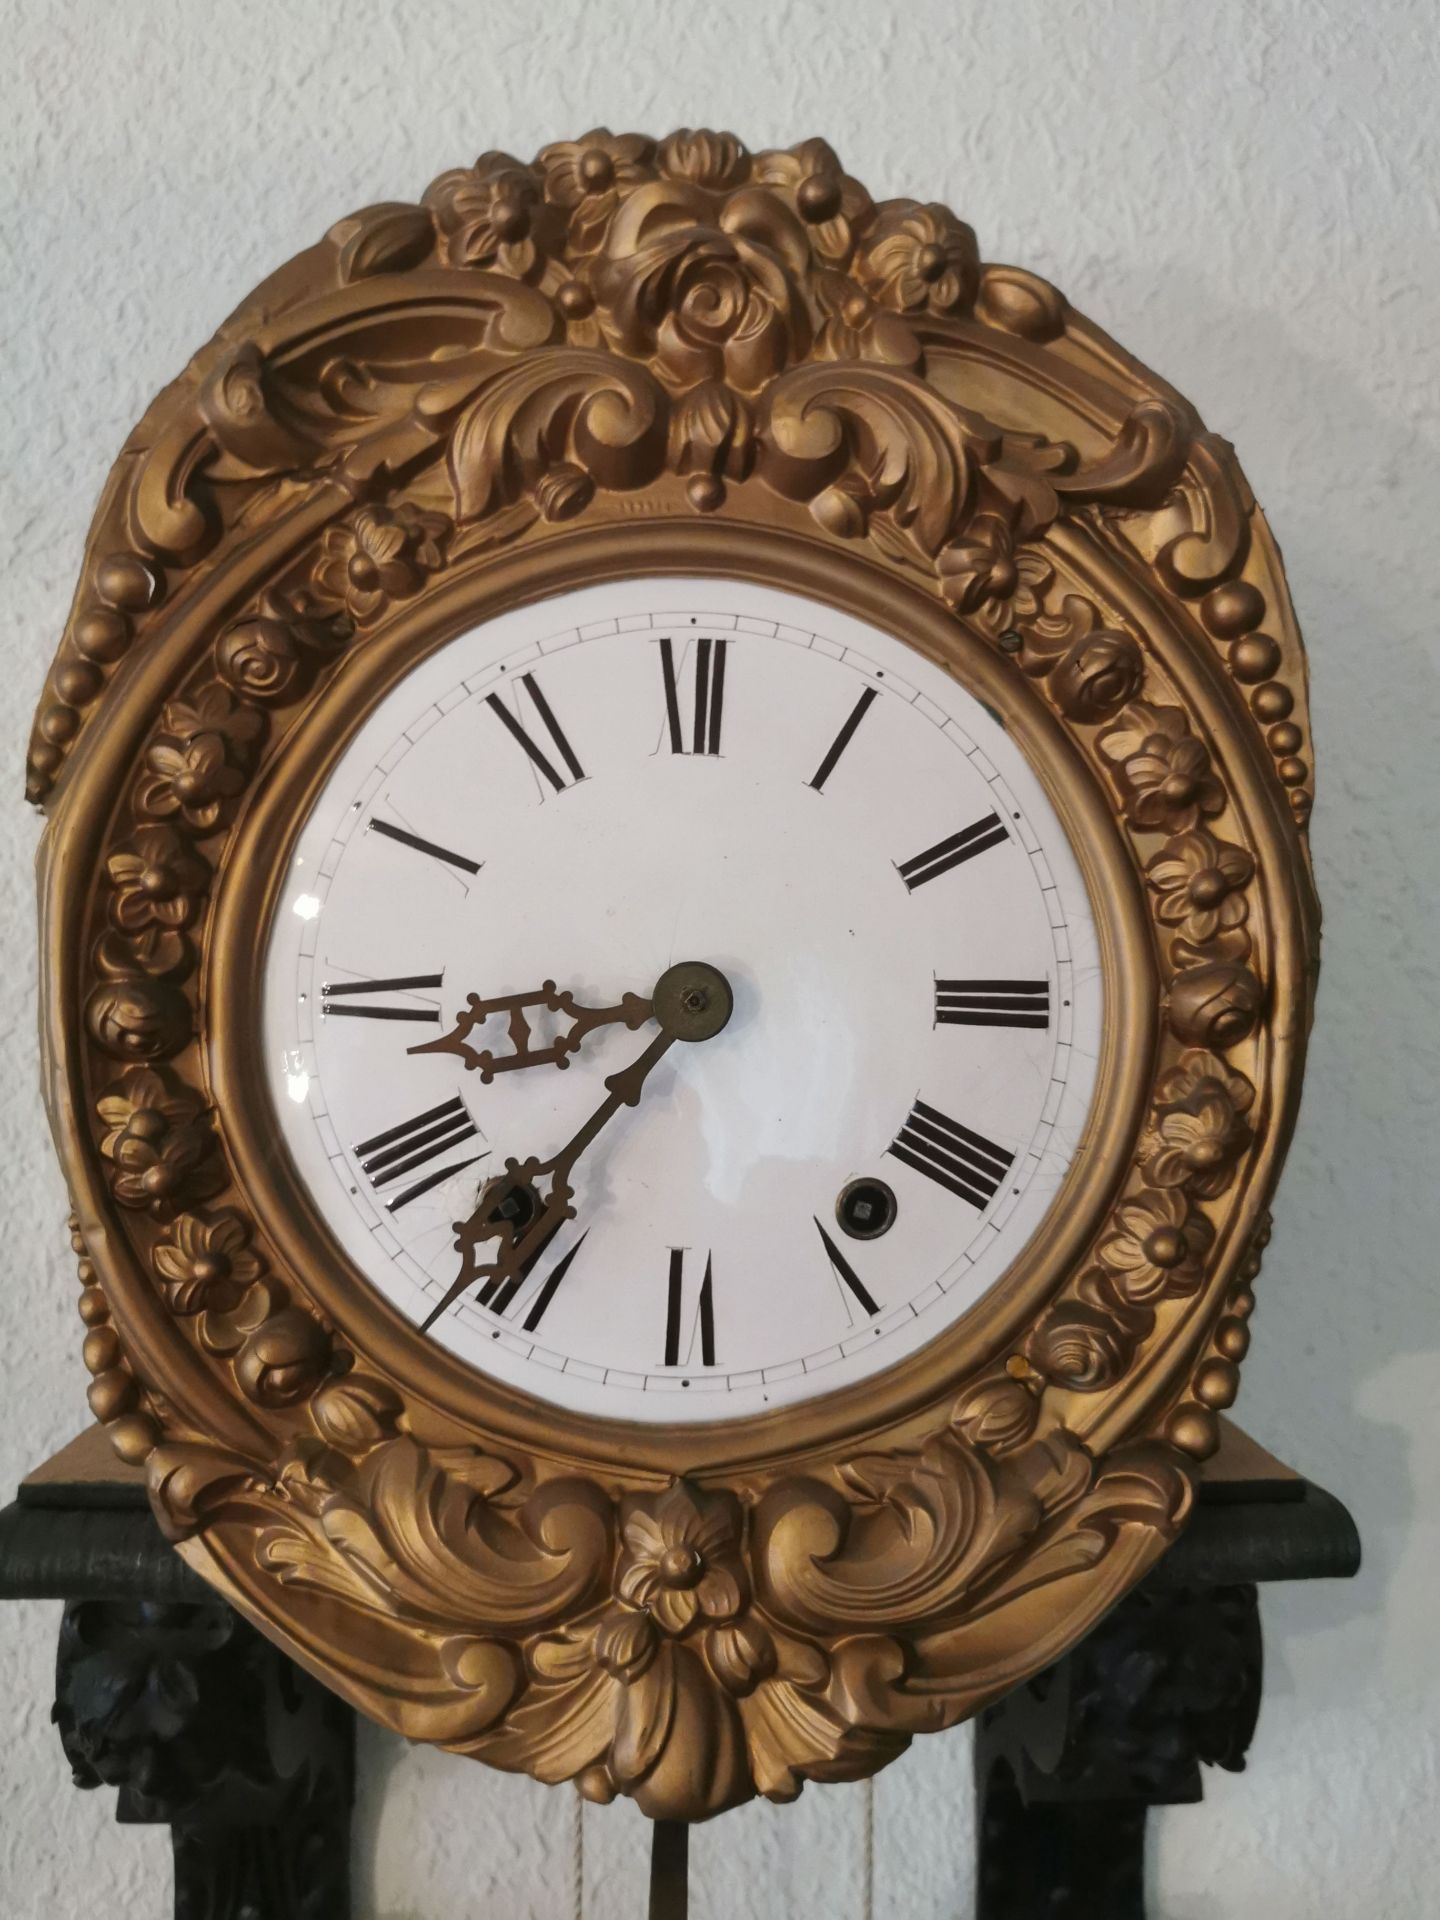 Pendulum Wall Clock with Tin Decorations - Image 2 of 3